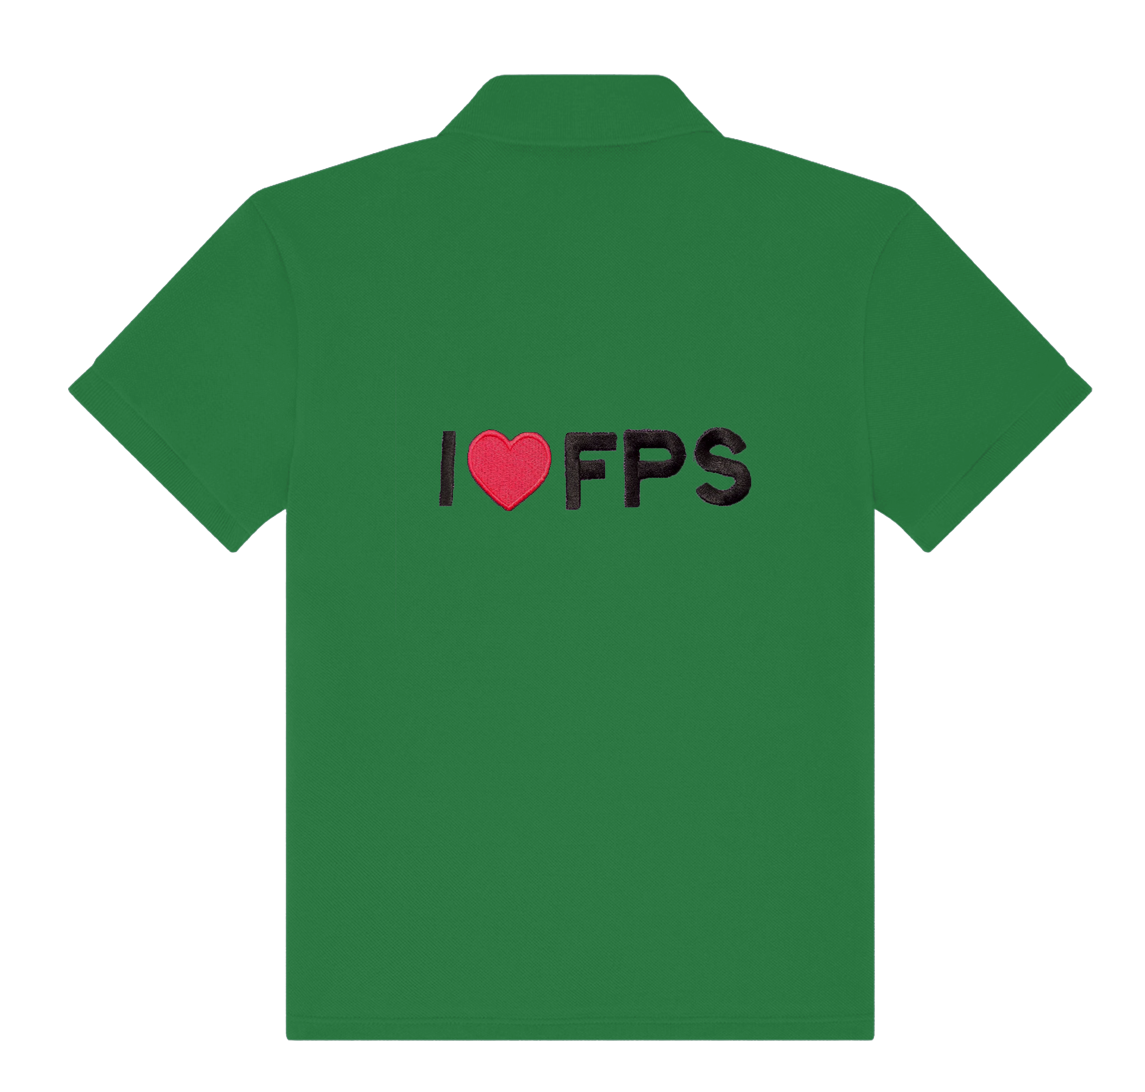 FPS Kids Polo - Youniform